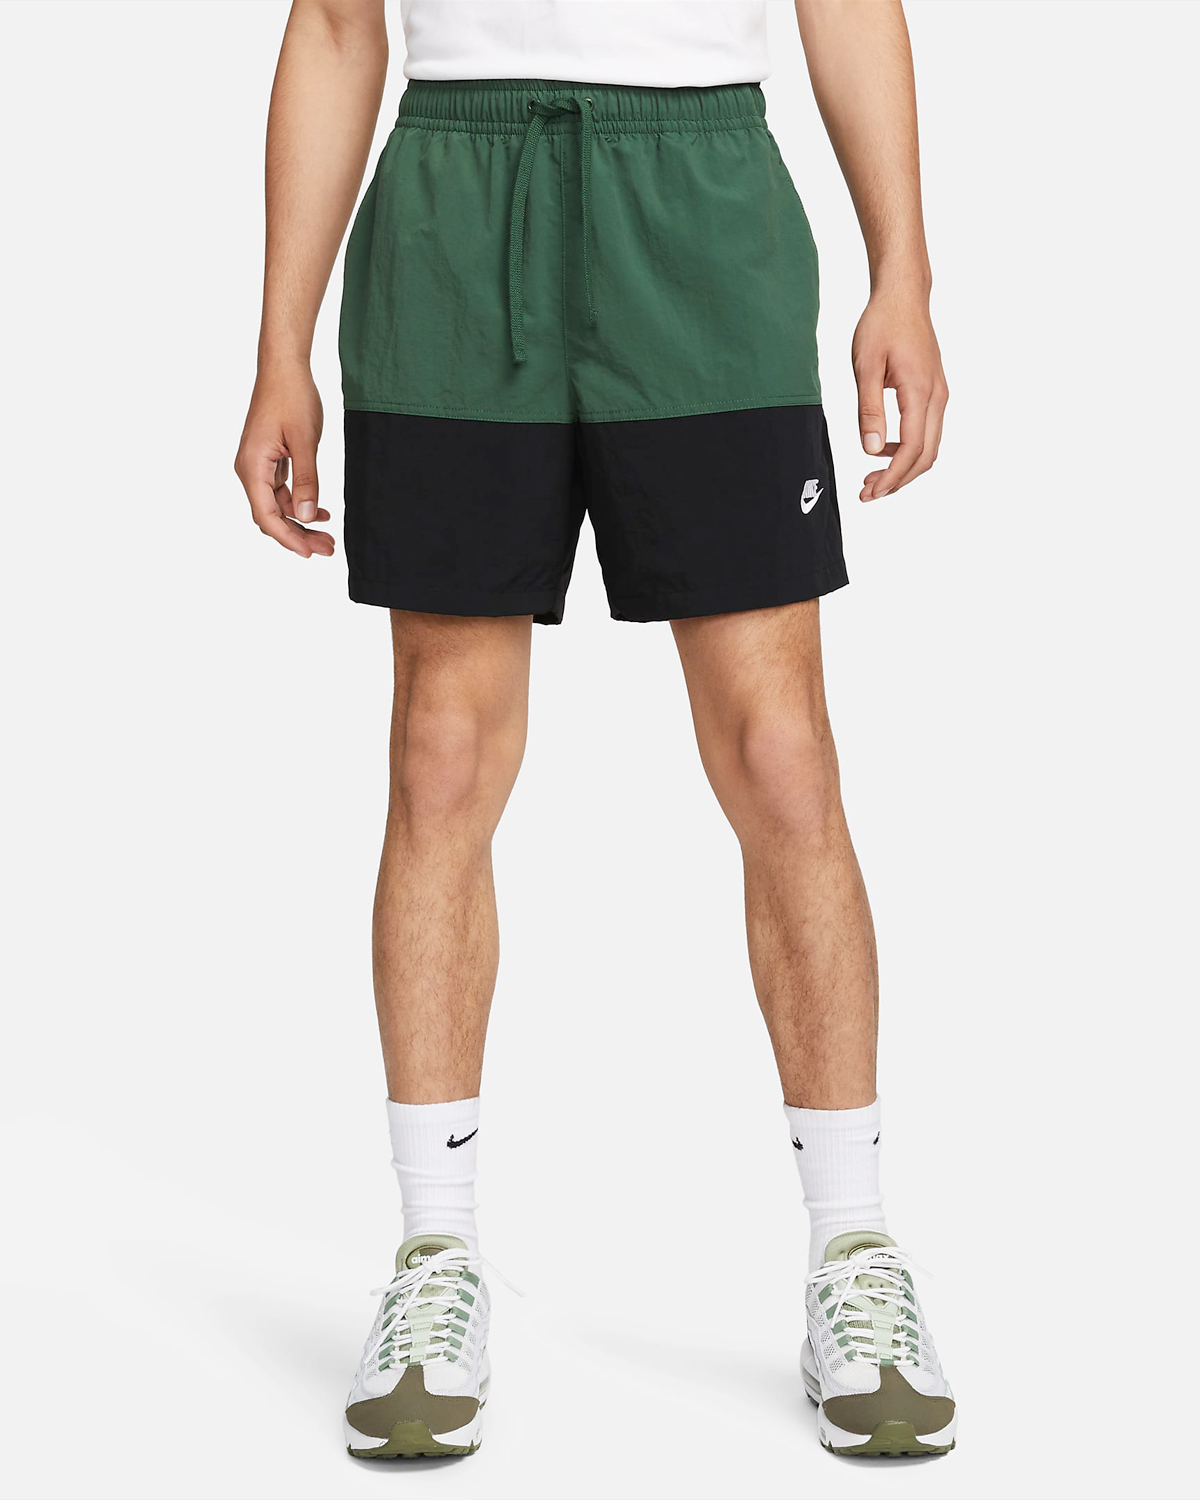 Nike-Club-Woven-Color-Blocked-Shorts-Fir-Green-Black